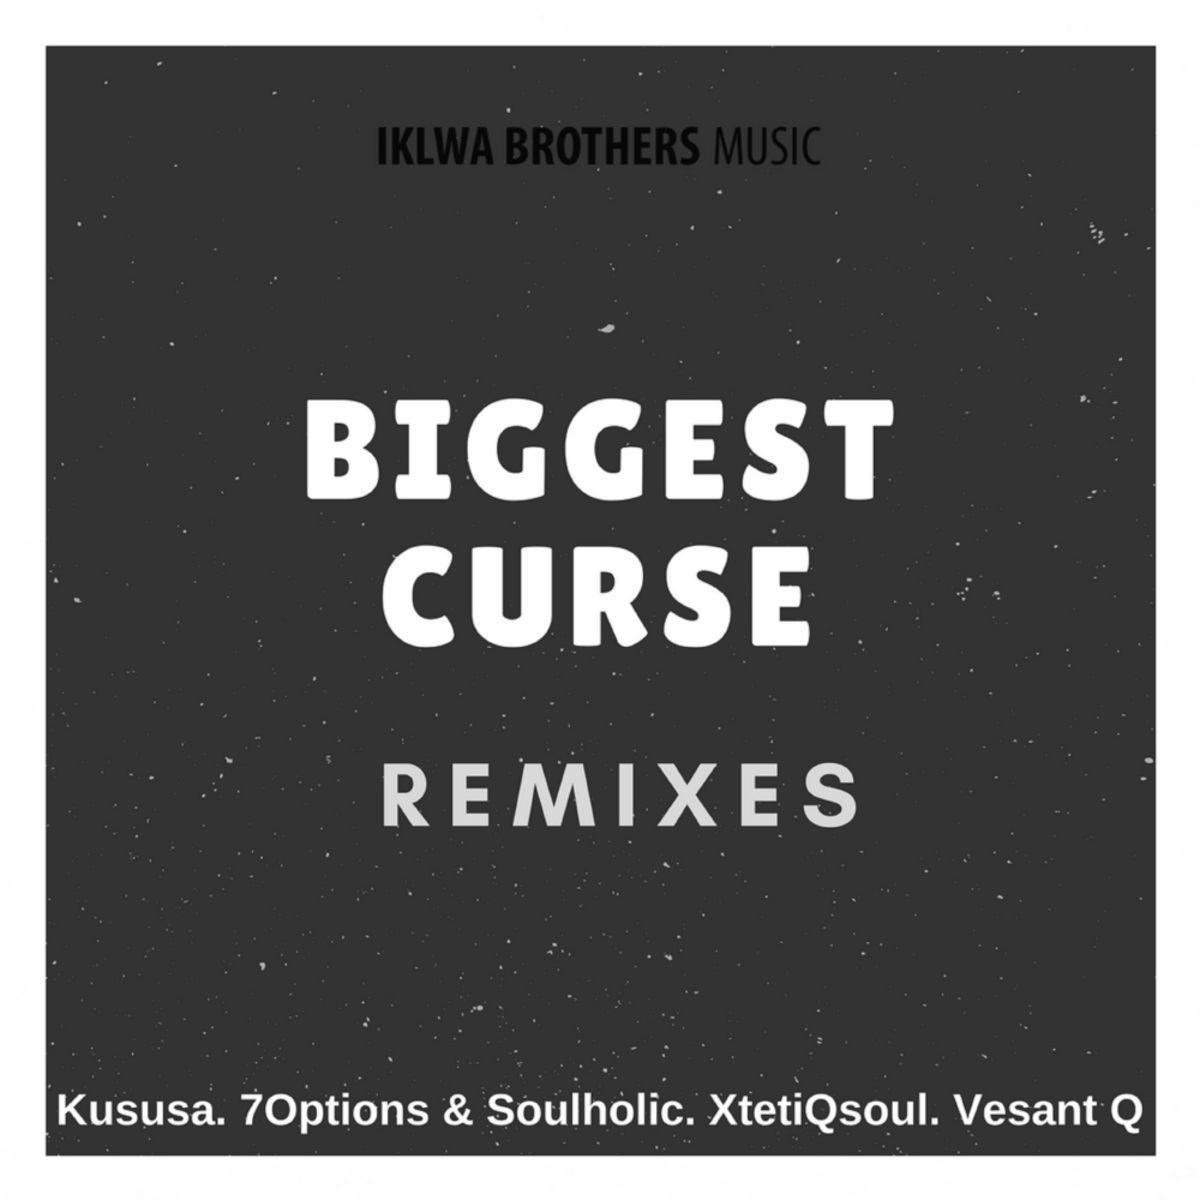 Original Swimming Party - Biggest Curse (Remixes) / Iklwa Brothers Music